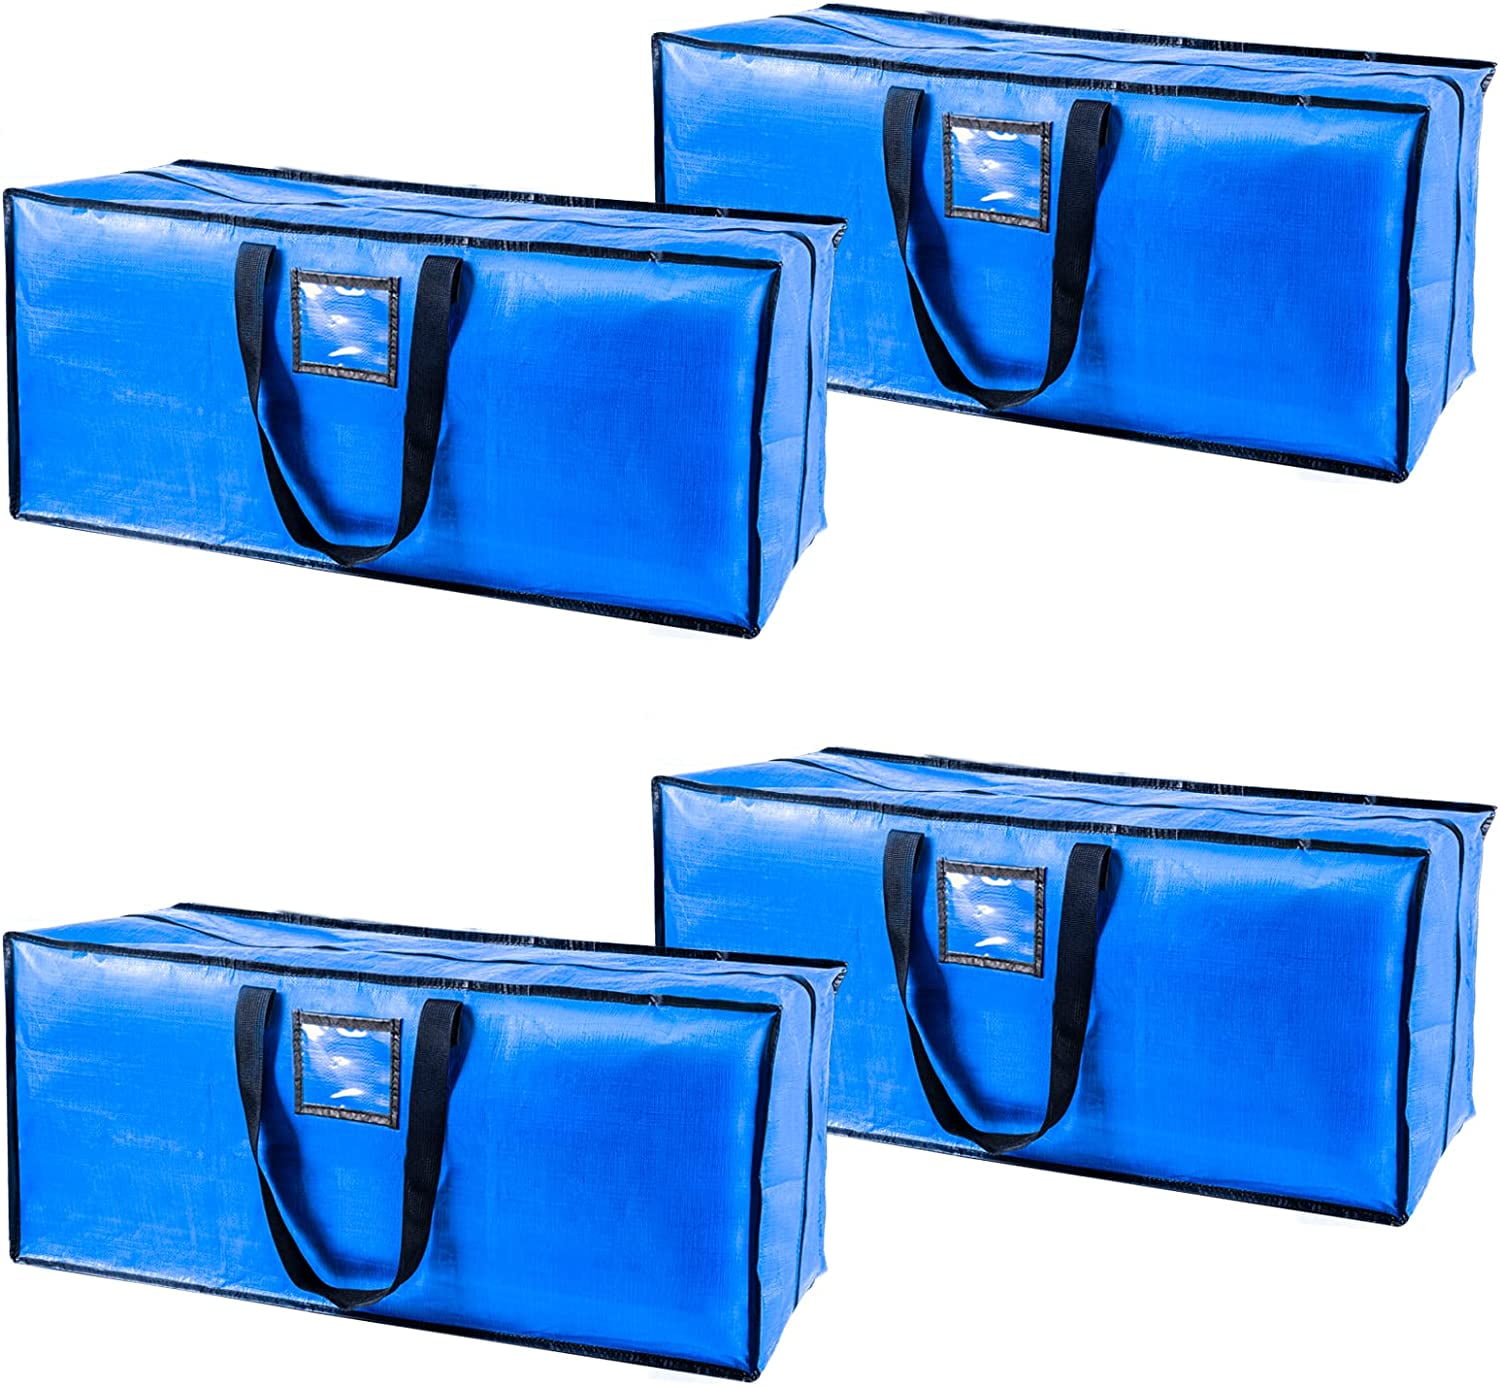 Cox Hardware and Lumber - Ziploc Heavy Duty 3XL Storage Bags 20 Ga